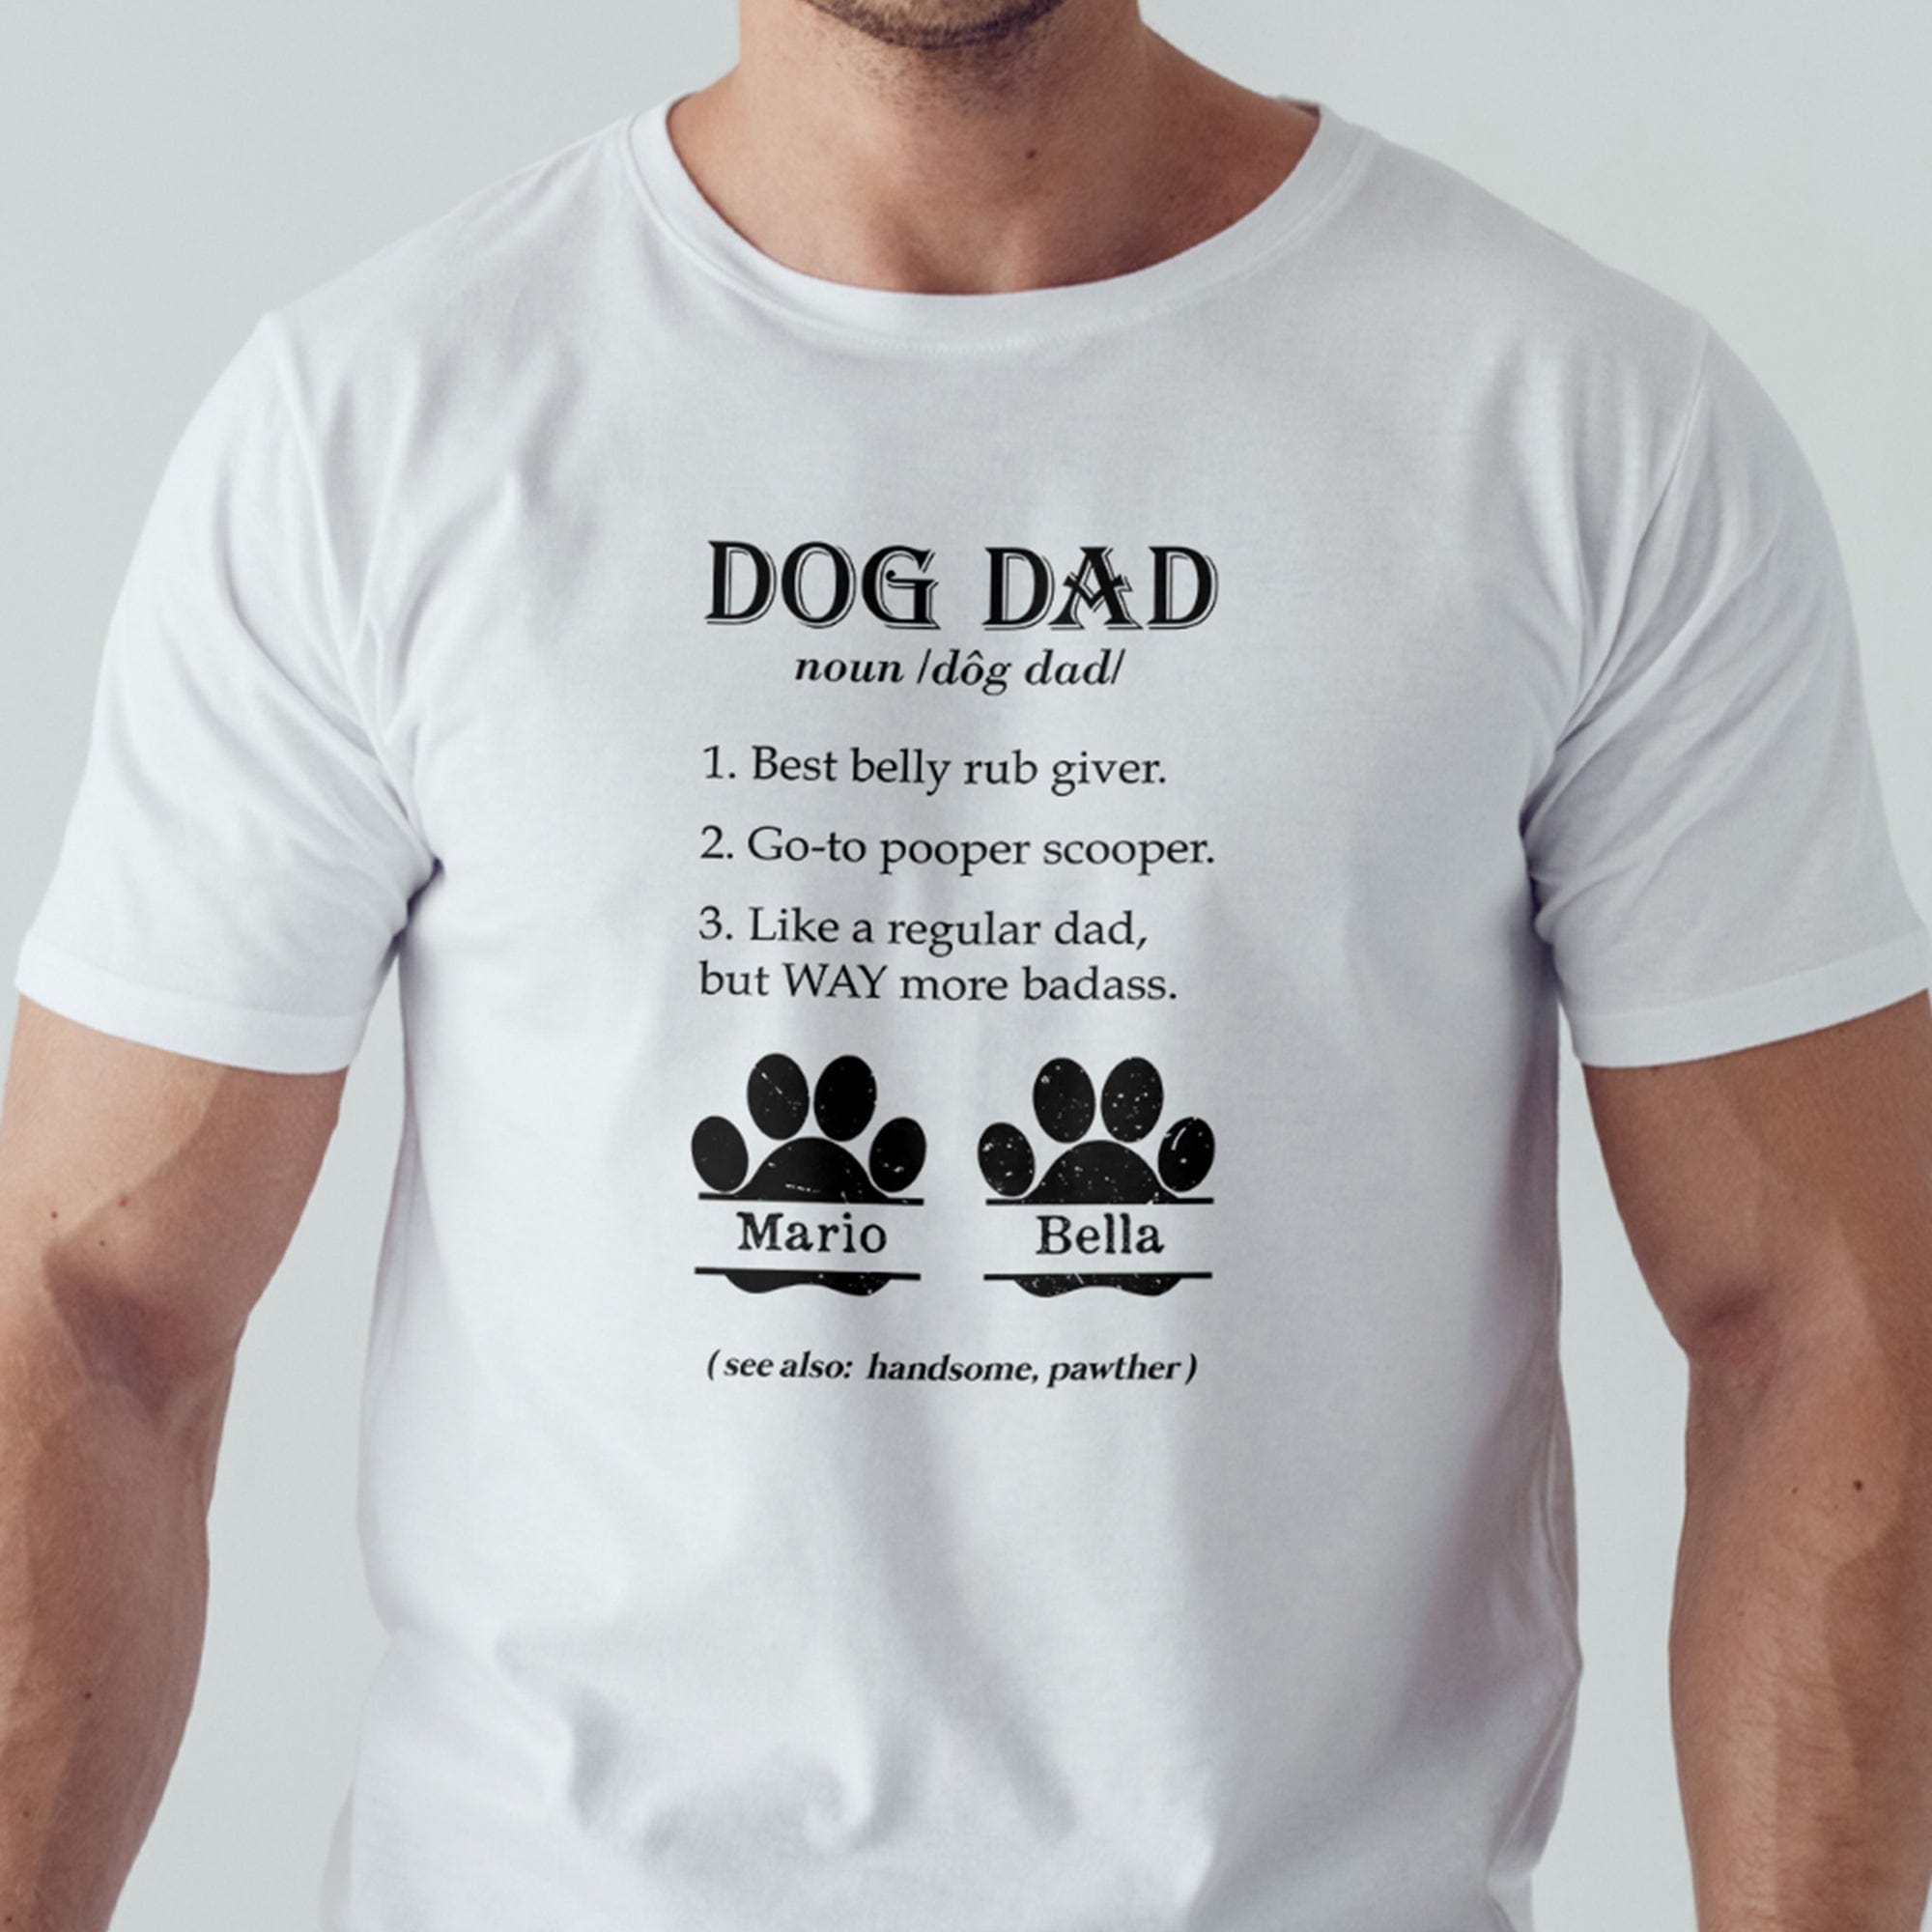 GeckoCustom Dog Dad Custom Shirt H228 Basic Tee / Sport Grey / S